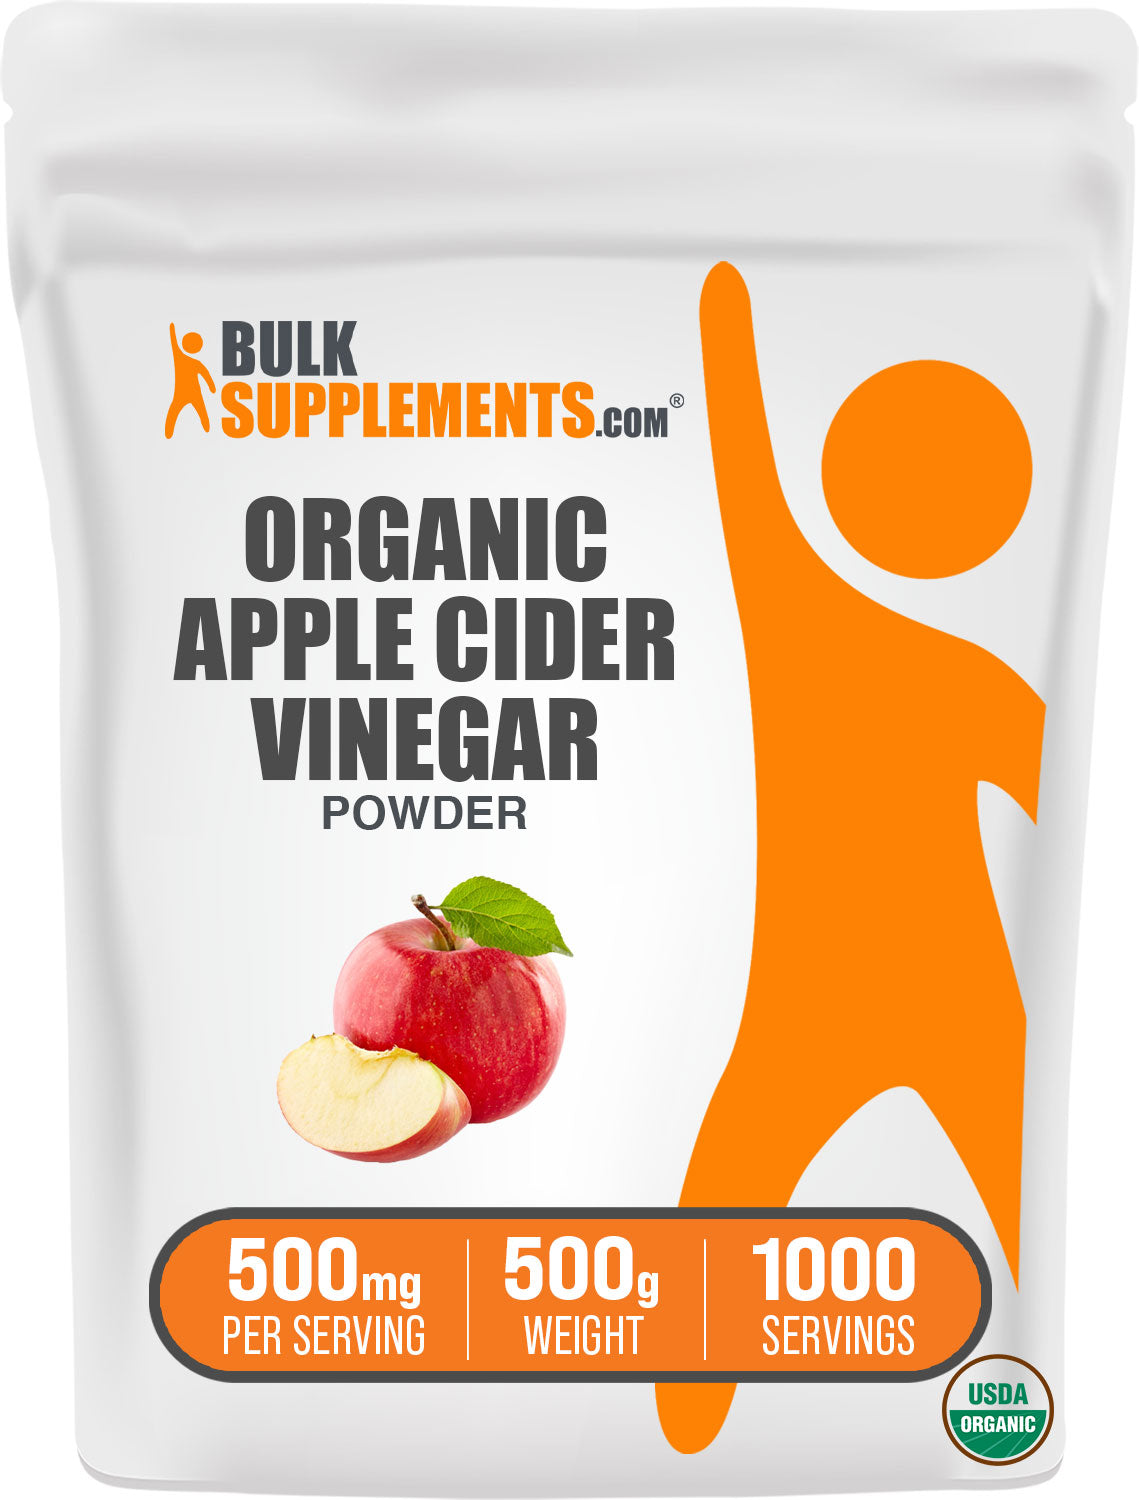 BulkSupplements.com Organic Apple Cider Vinegar Powder 500g Bag